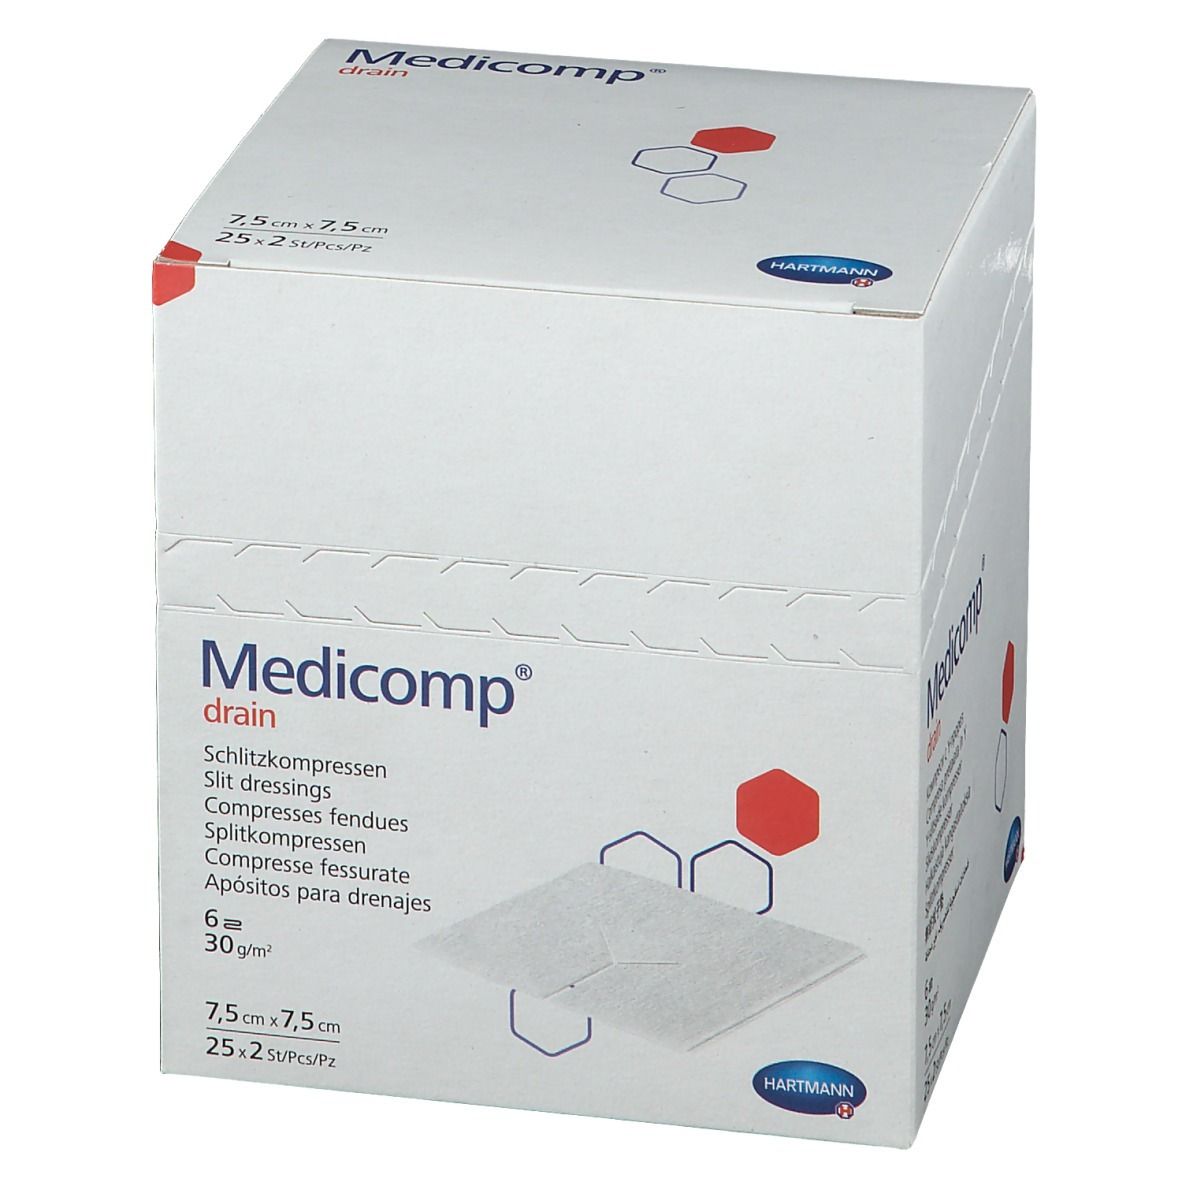 Medicomp® drain 7,5 x 7,5 cm steril